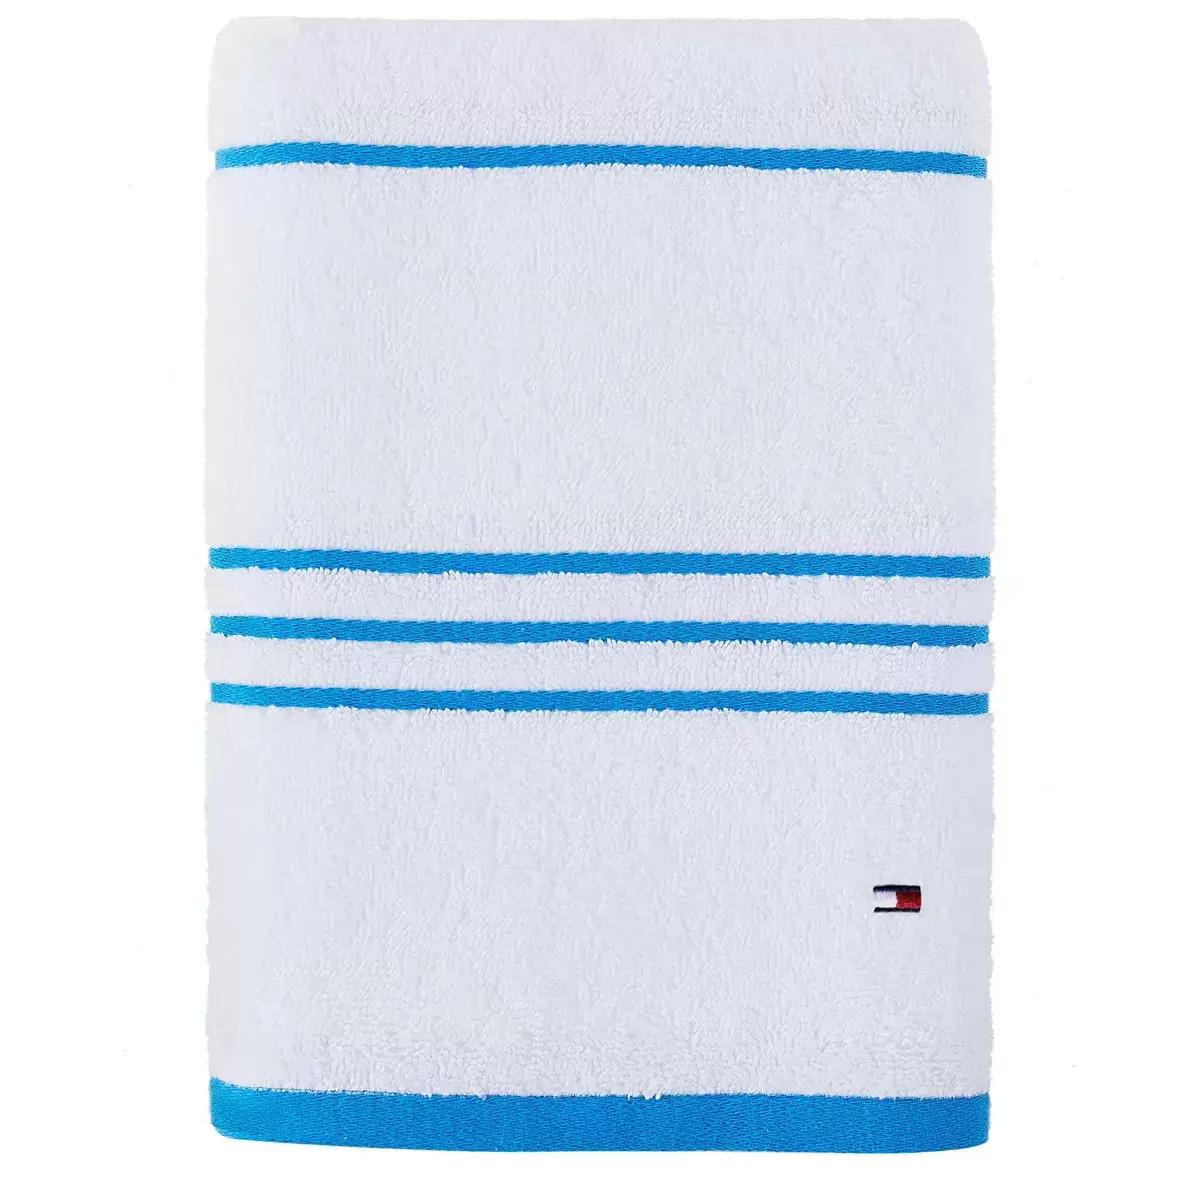 Tommy Hilfiger Modern American Bath Towels for $5.99